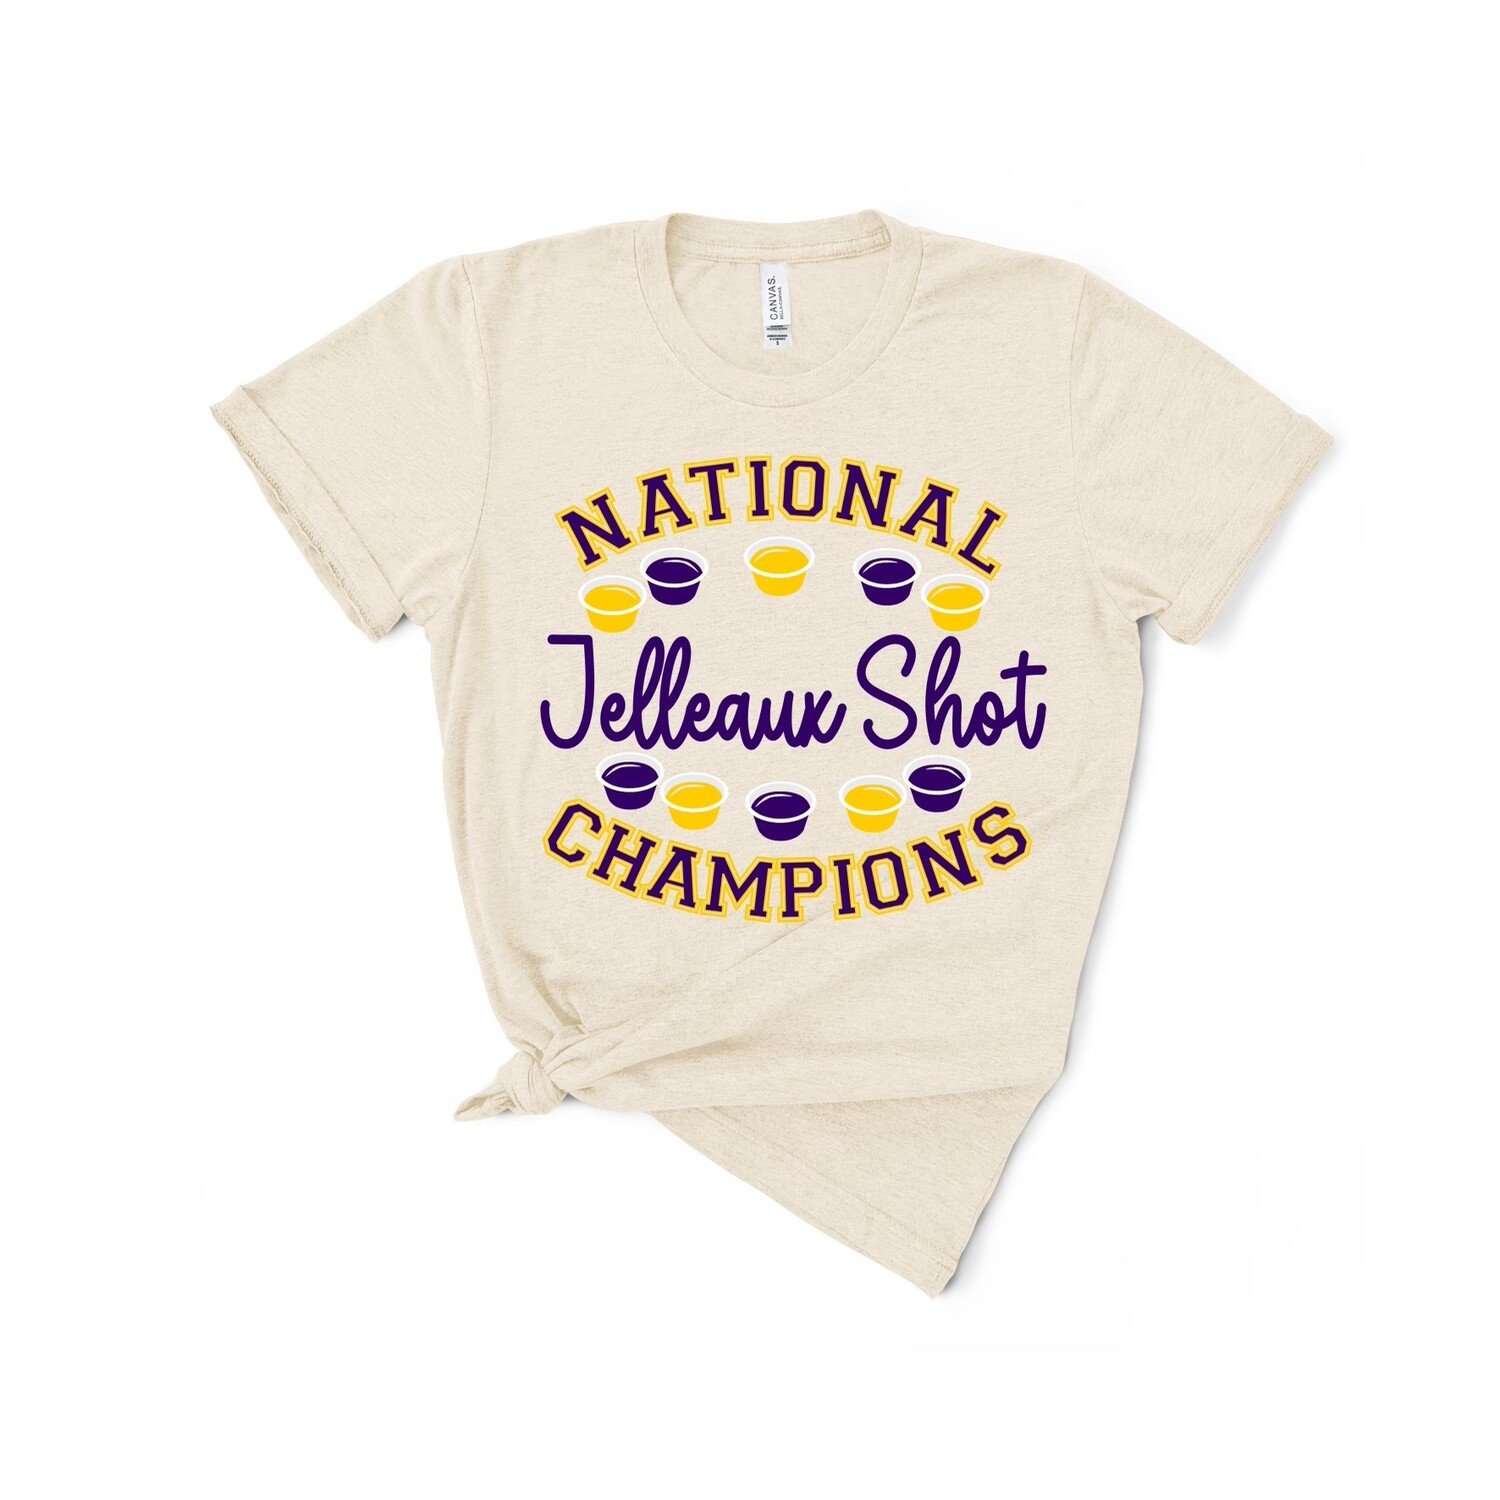 national championship shirt